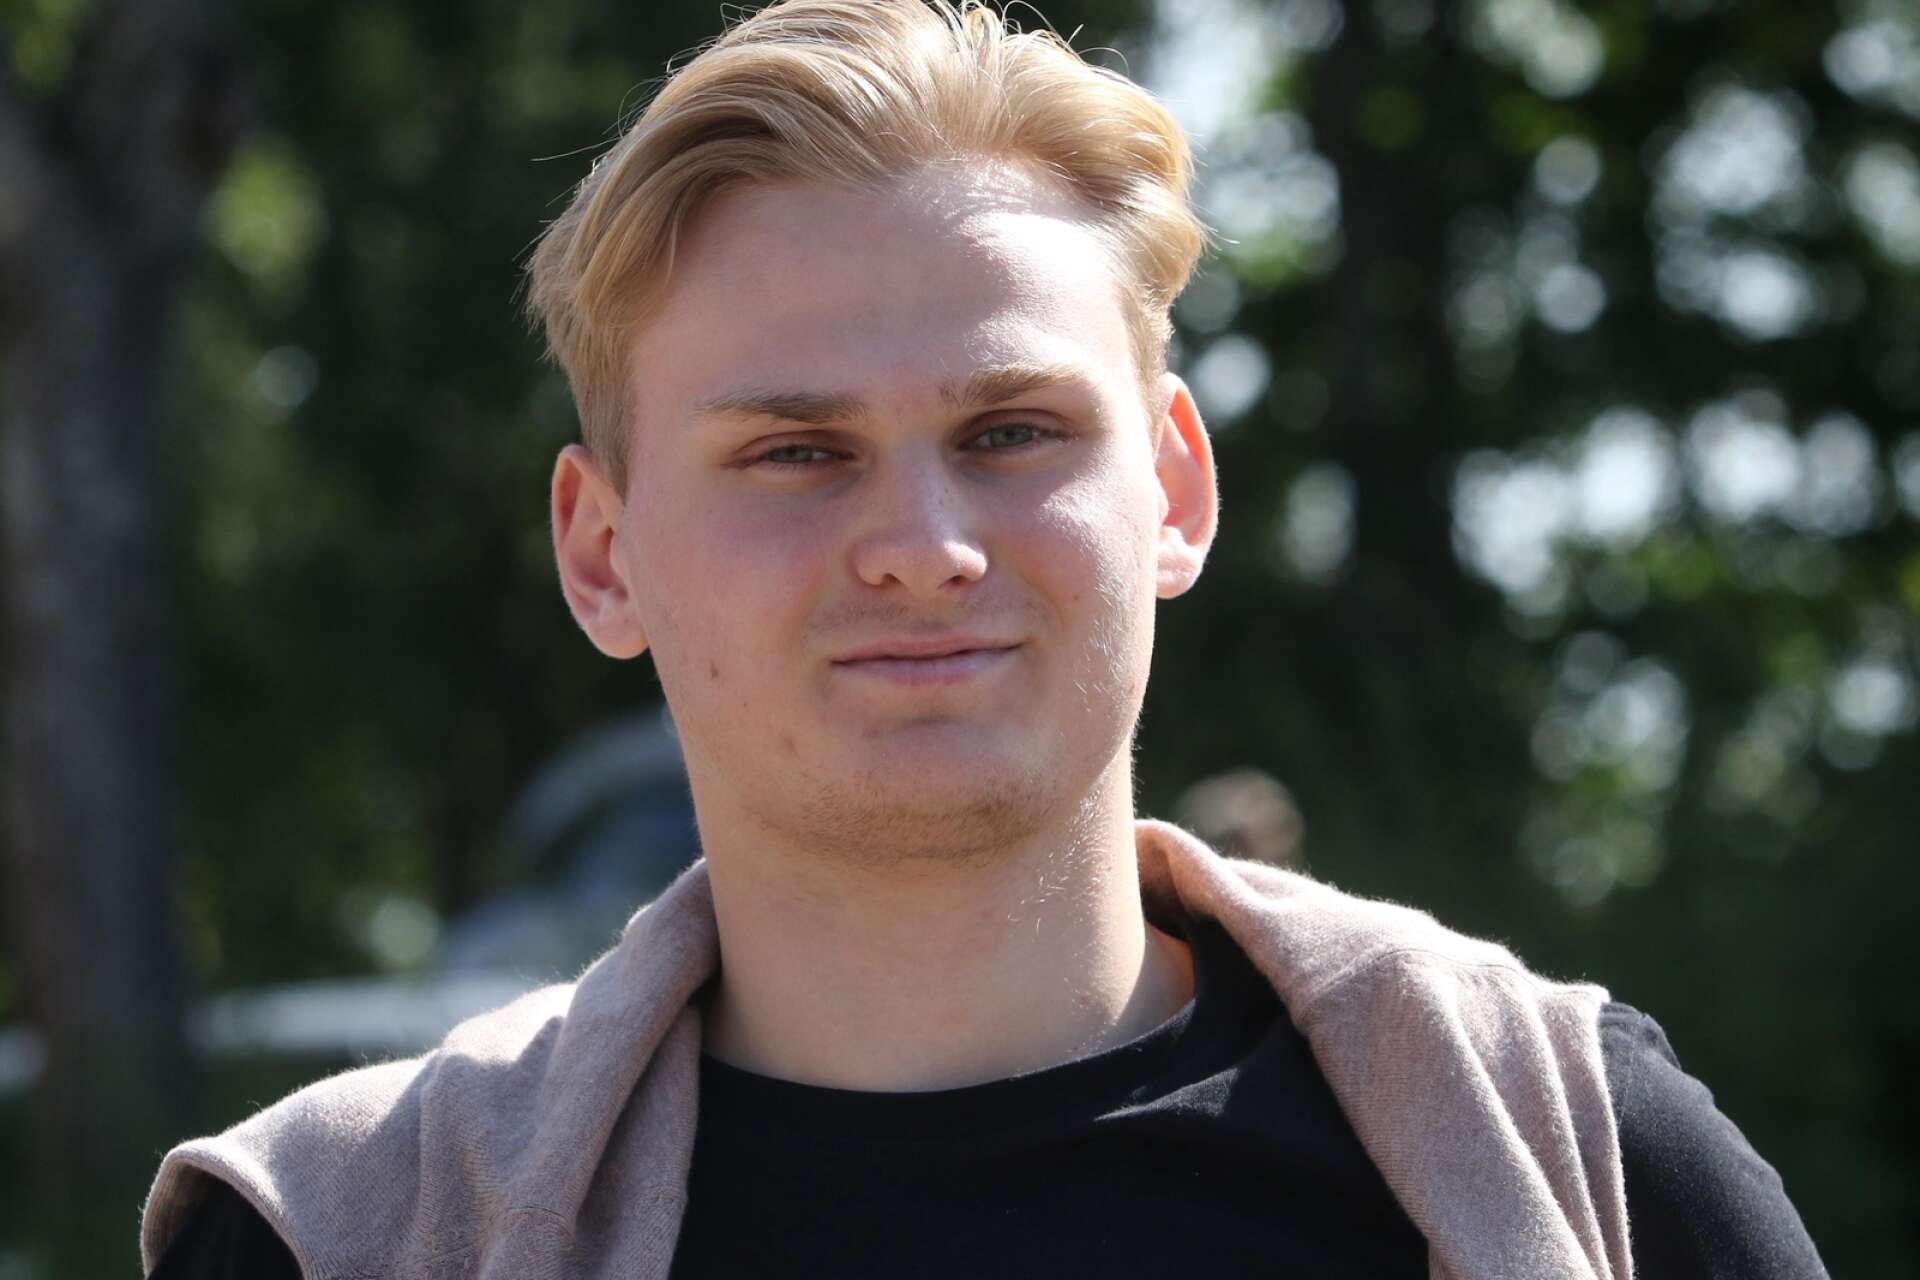 Melker ”Fidde” Bäckman, 18, Mariestad